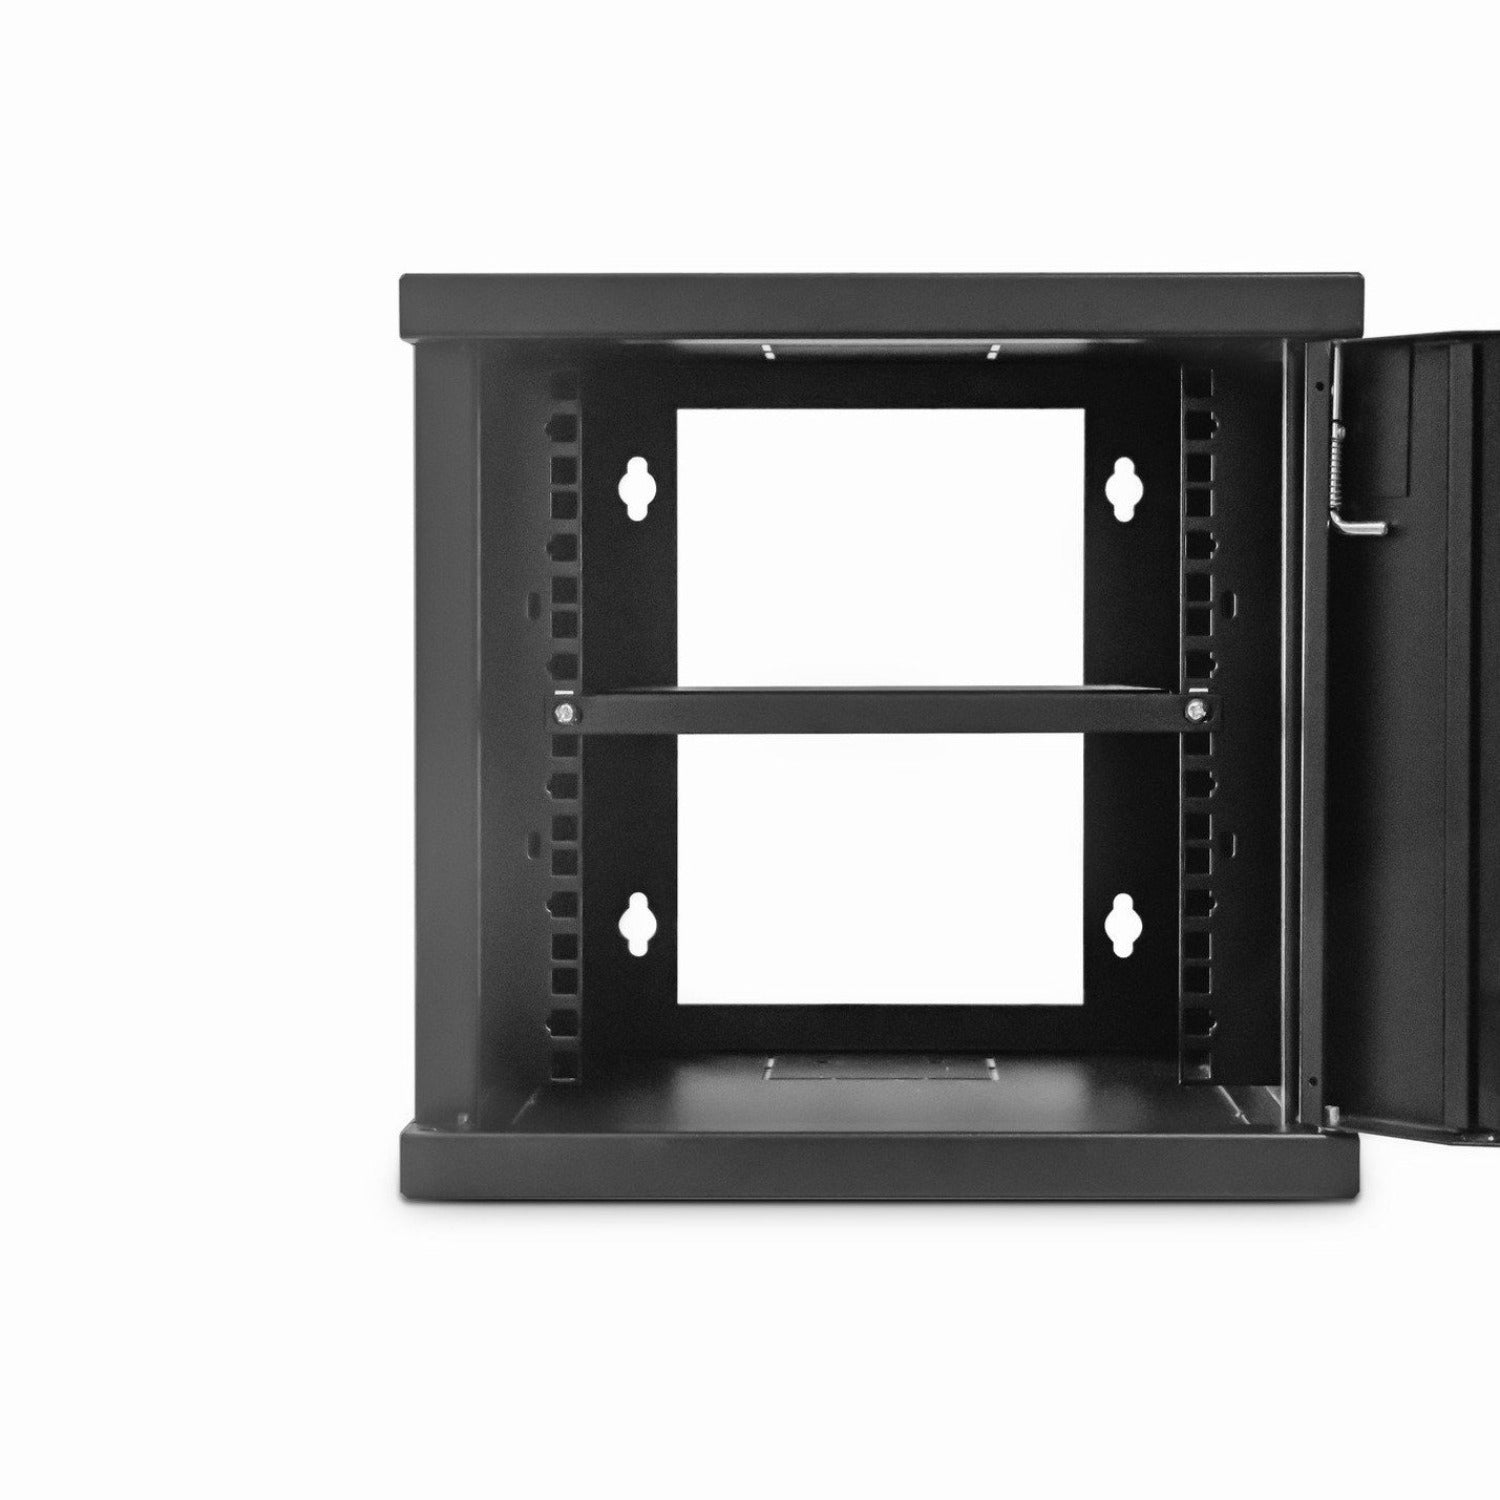 4U 300mm 10" Data Wall Cabinet (SoHo) - Black